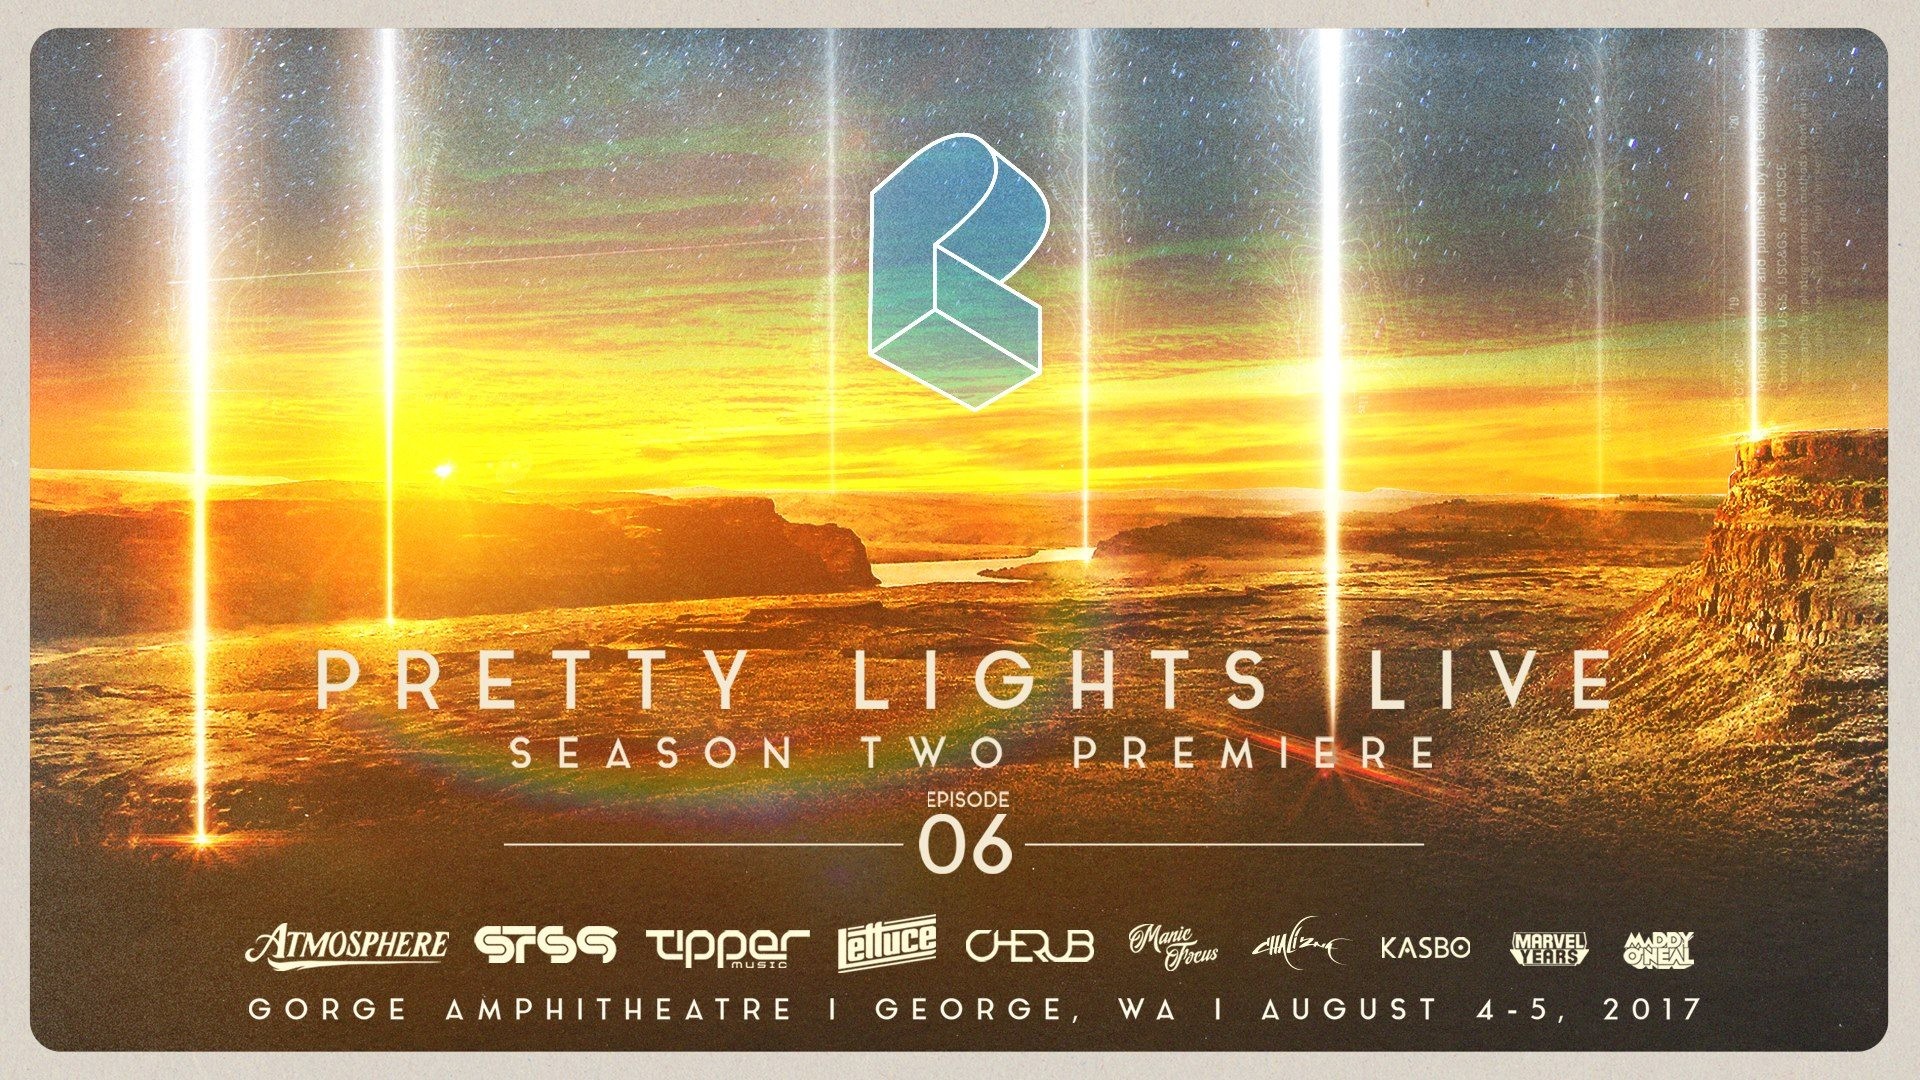 1920x1080 Pretty Lights @ The Gorge